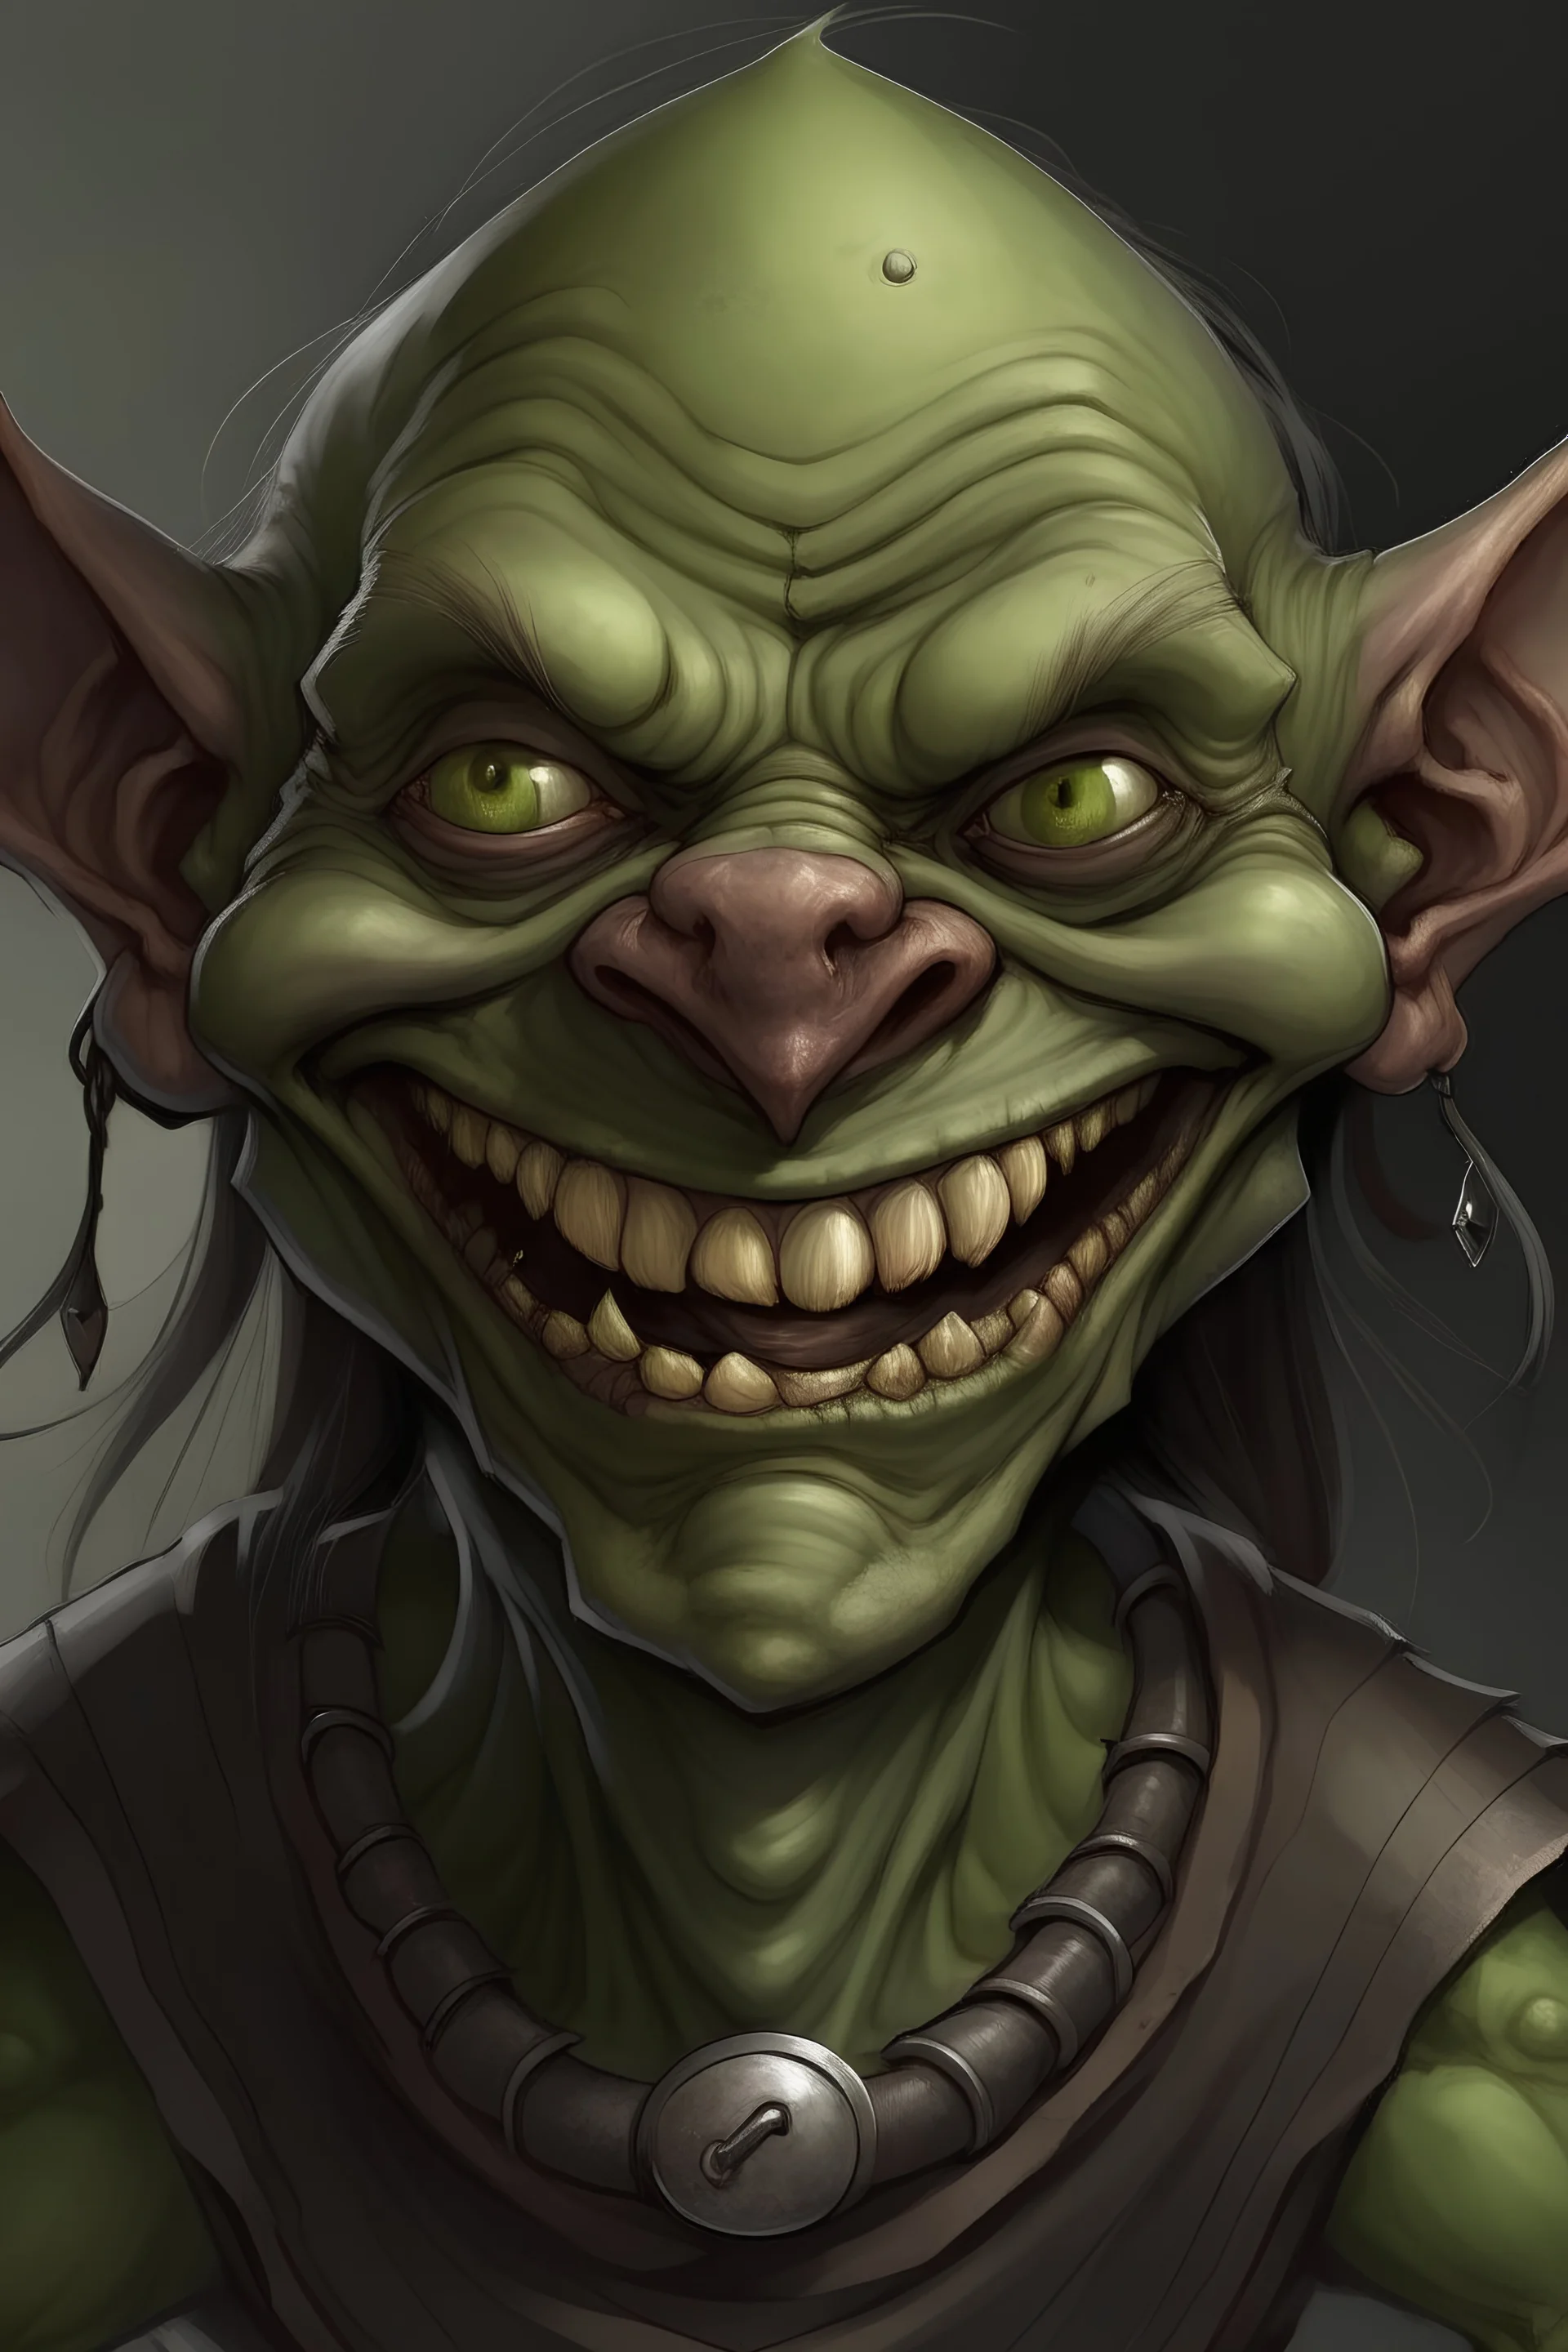 Female goblin with bad teeth